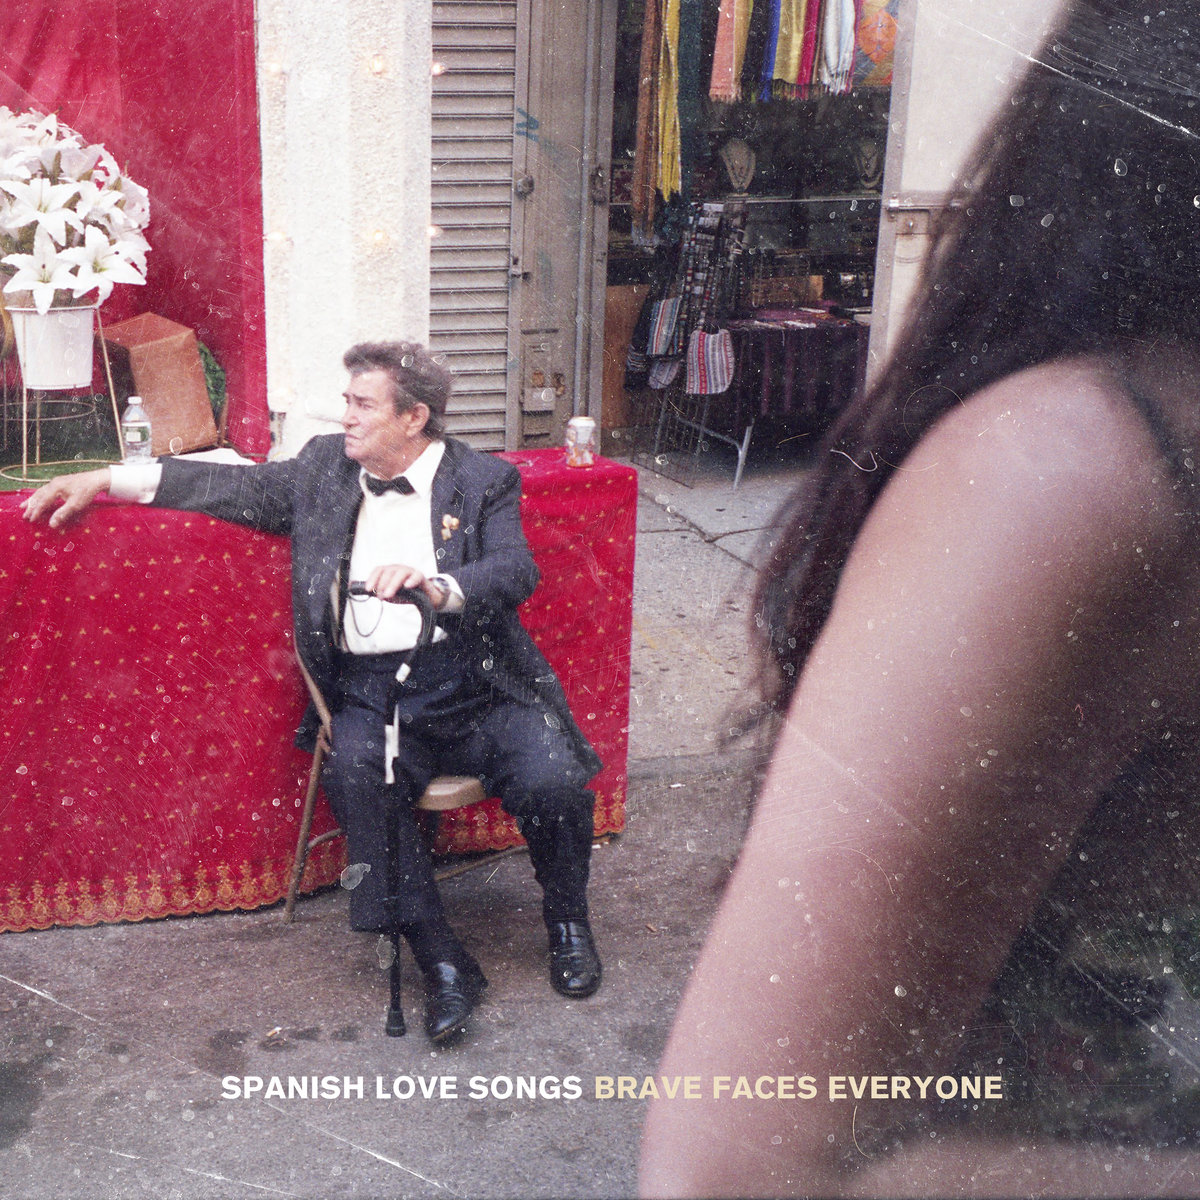 Spanish Love Songs — Self Destruction (As a Sensible Career Choice) cover artwork